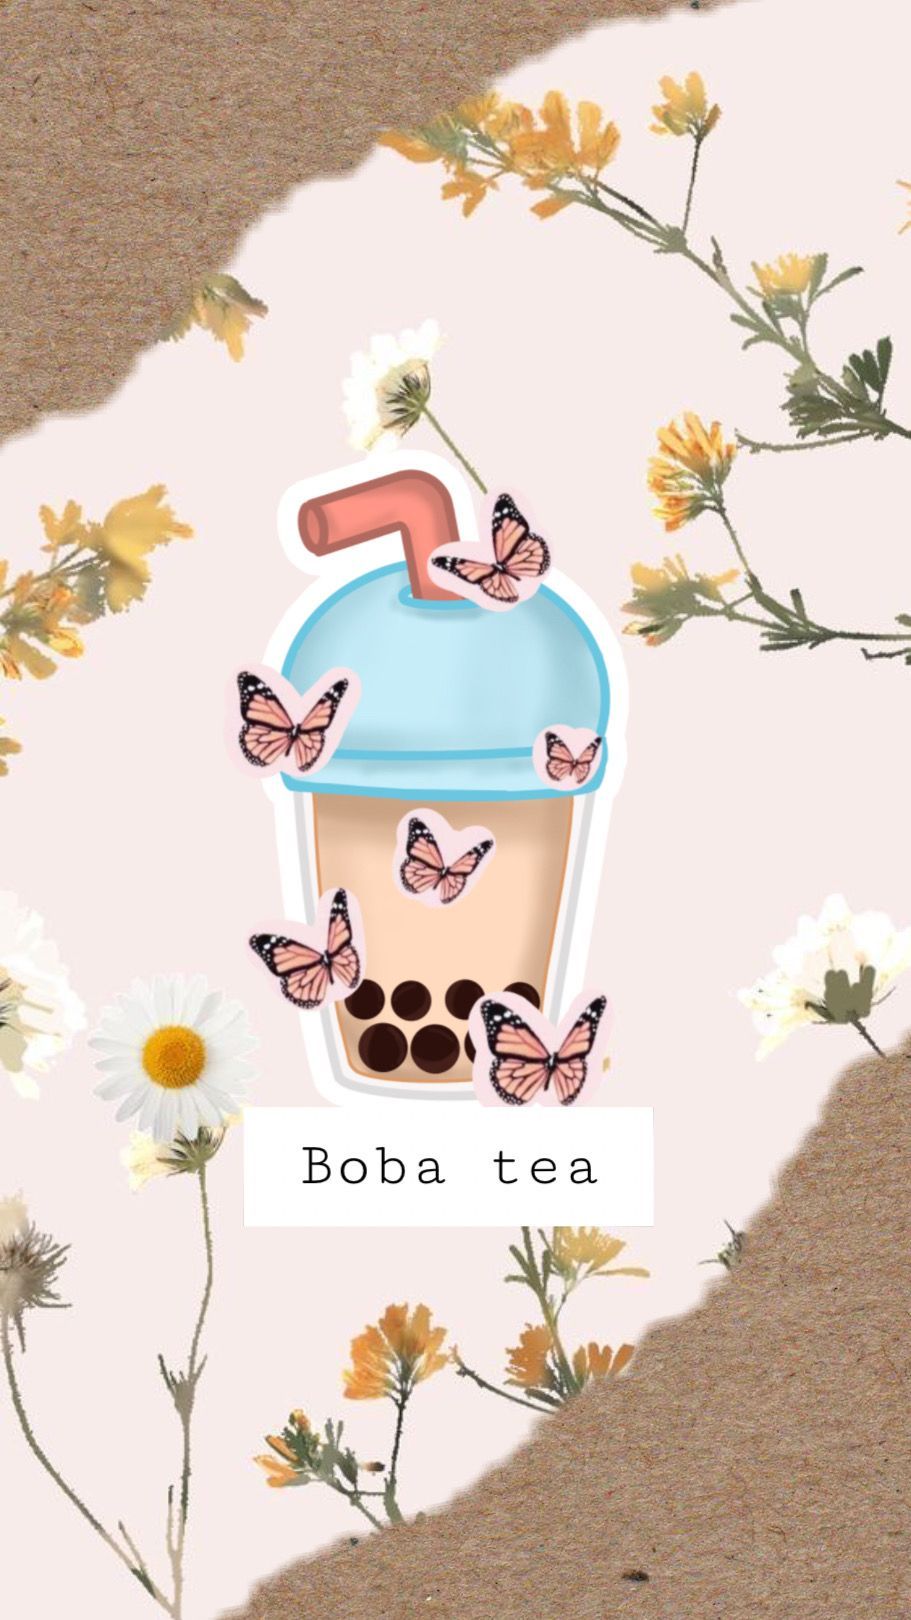 Boba tea wallpaper. Tea wallpaper, Wallpaper iphone cute, Boba tea